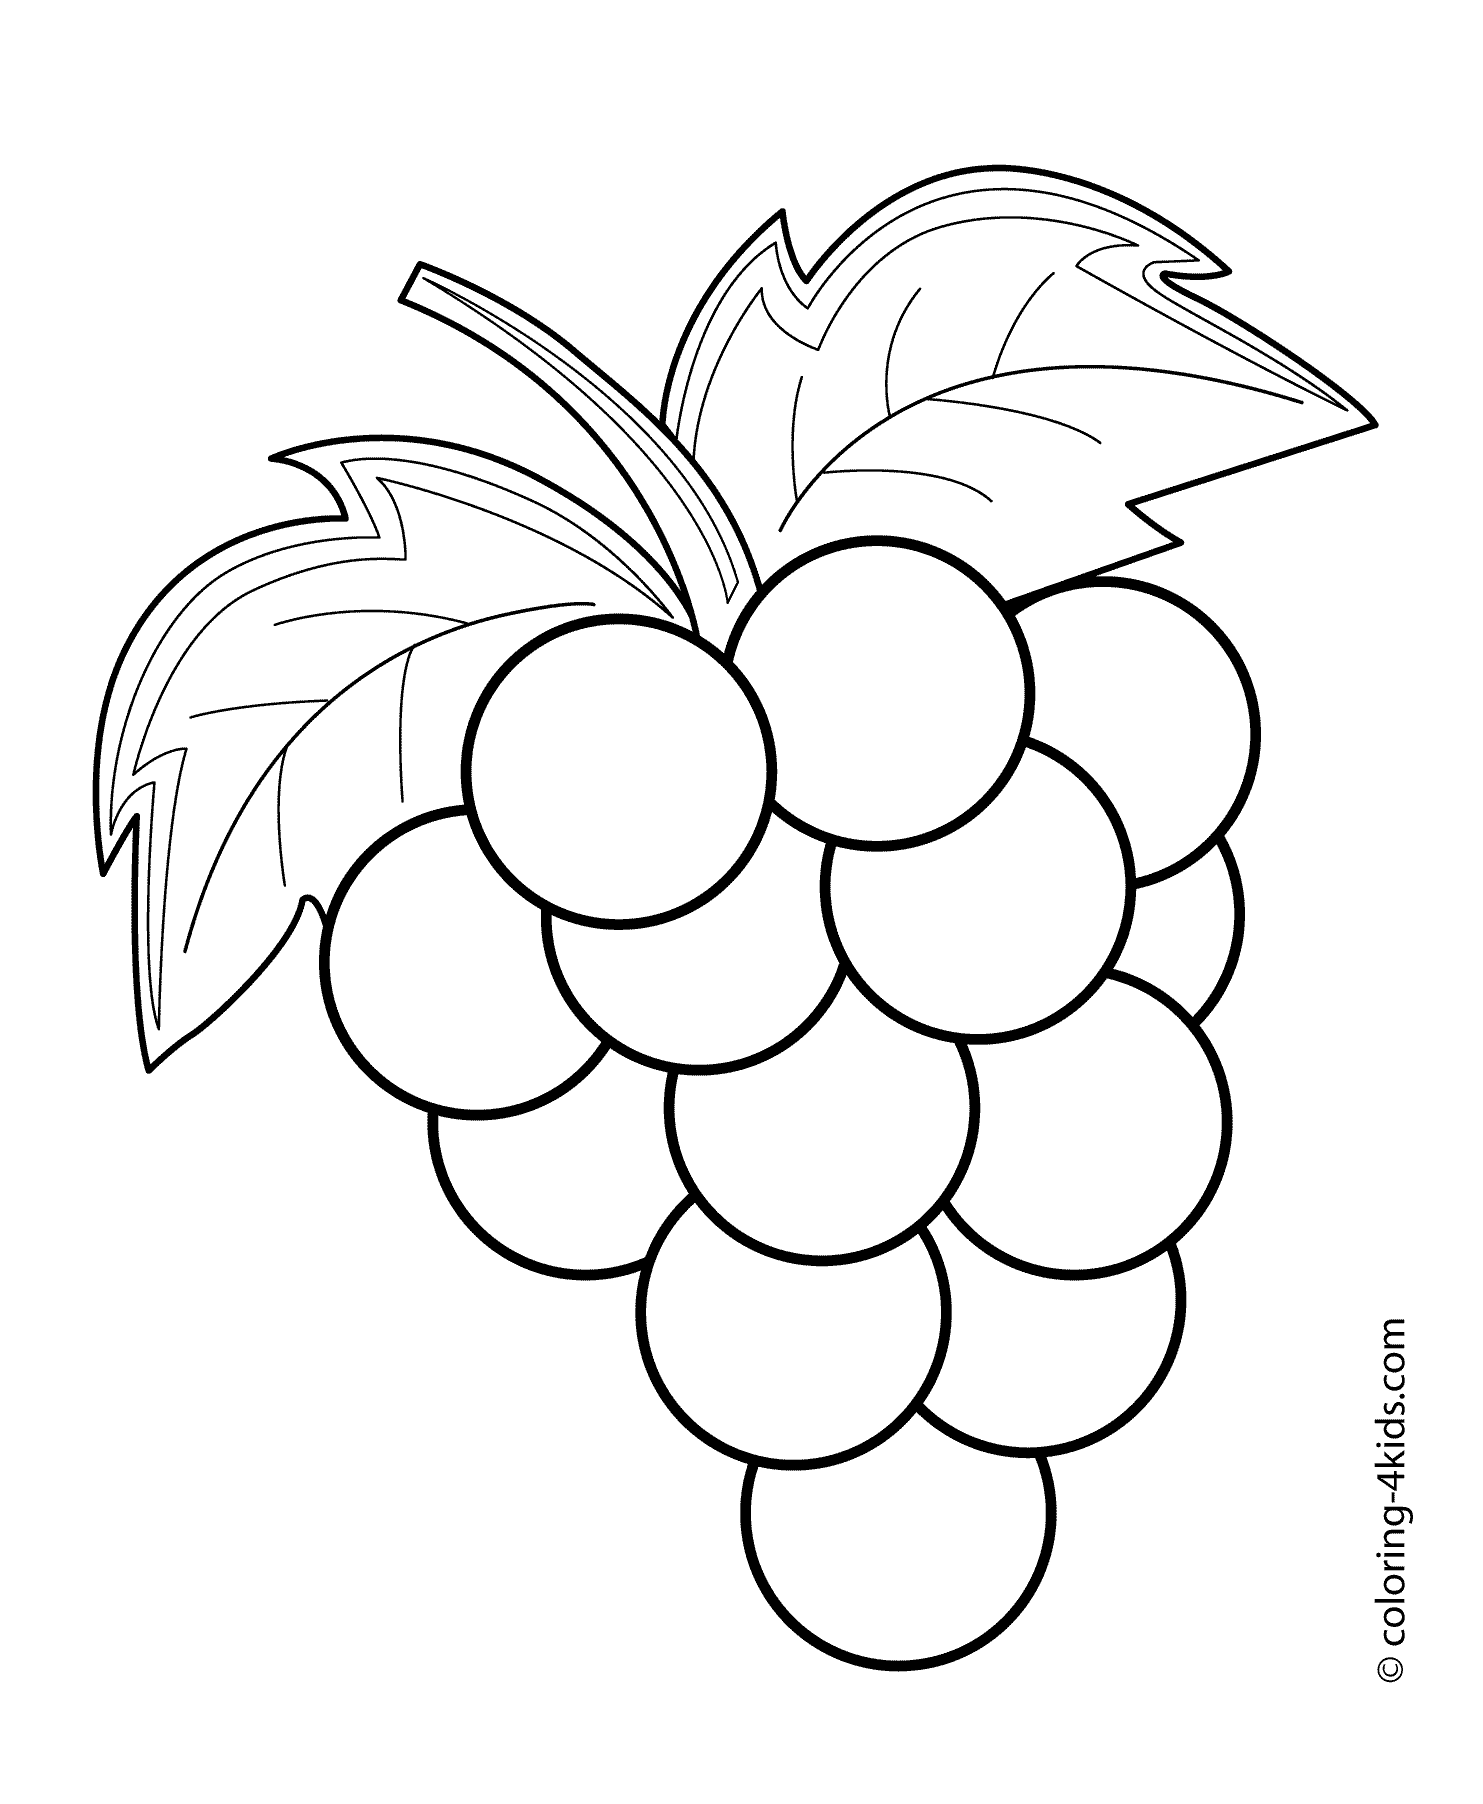 Grape Drawing at GetDrawings | Free download